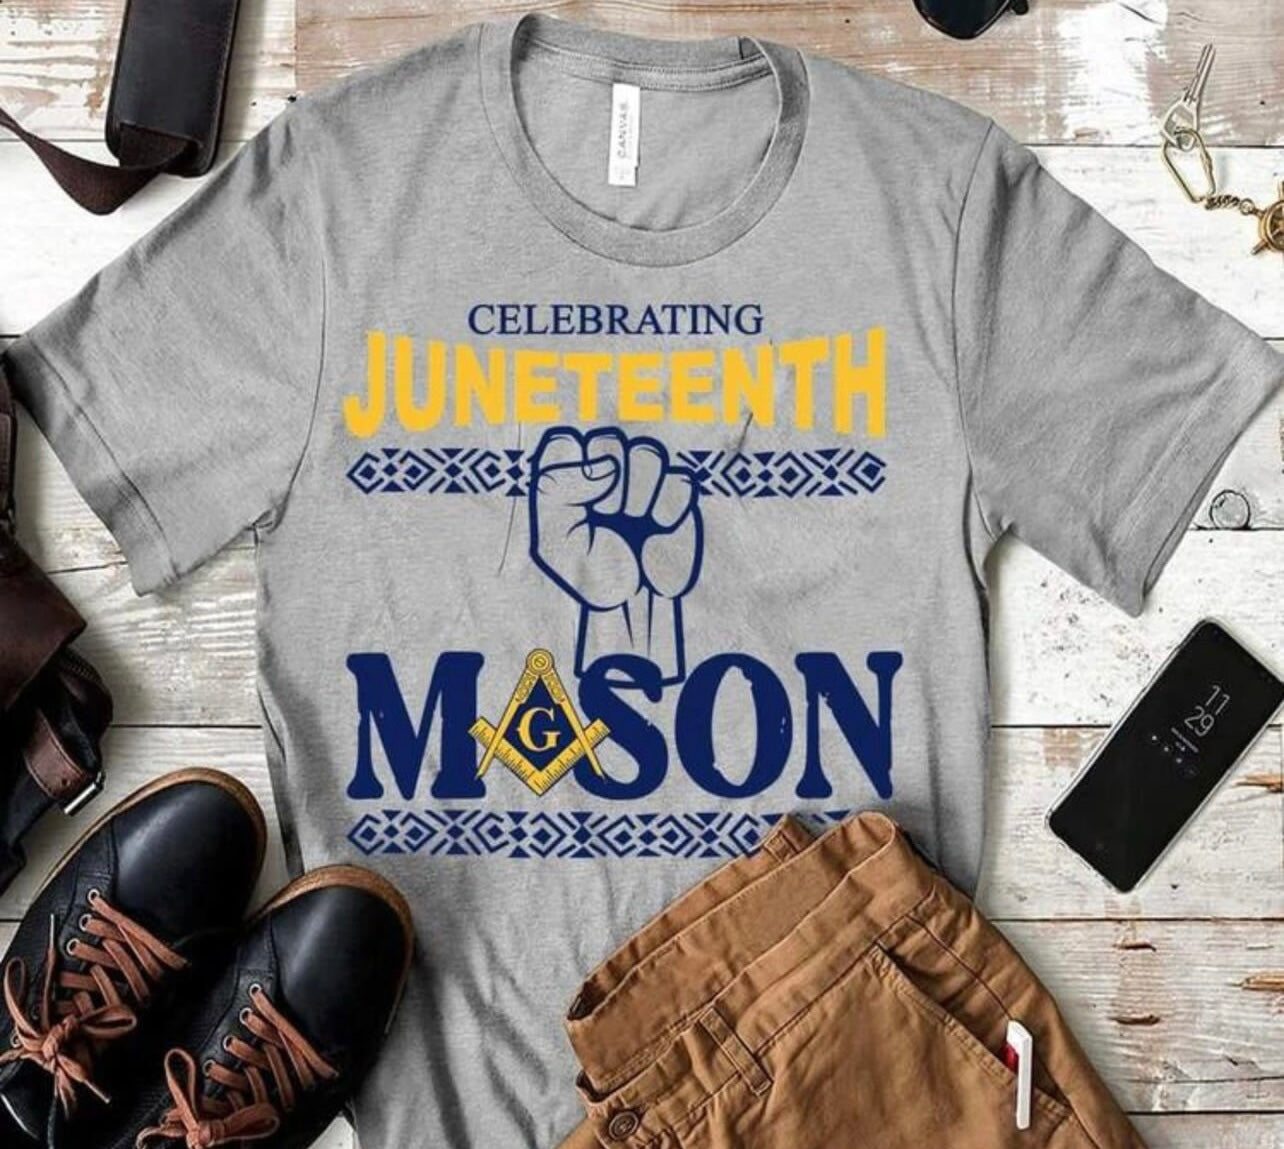 Mason Juneteenth T-shirt